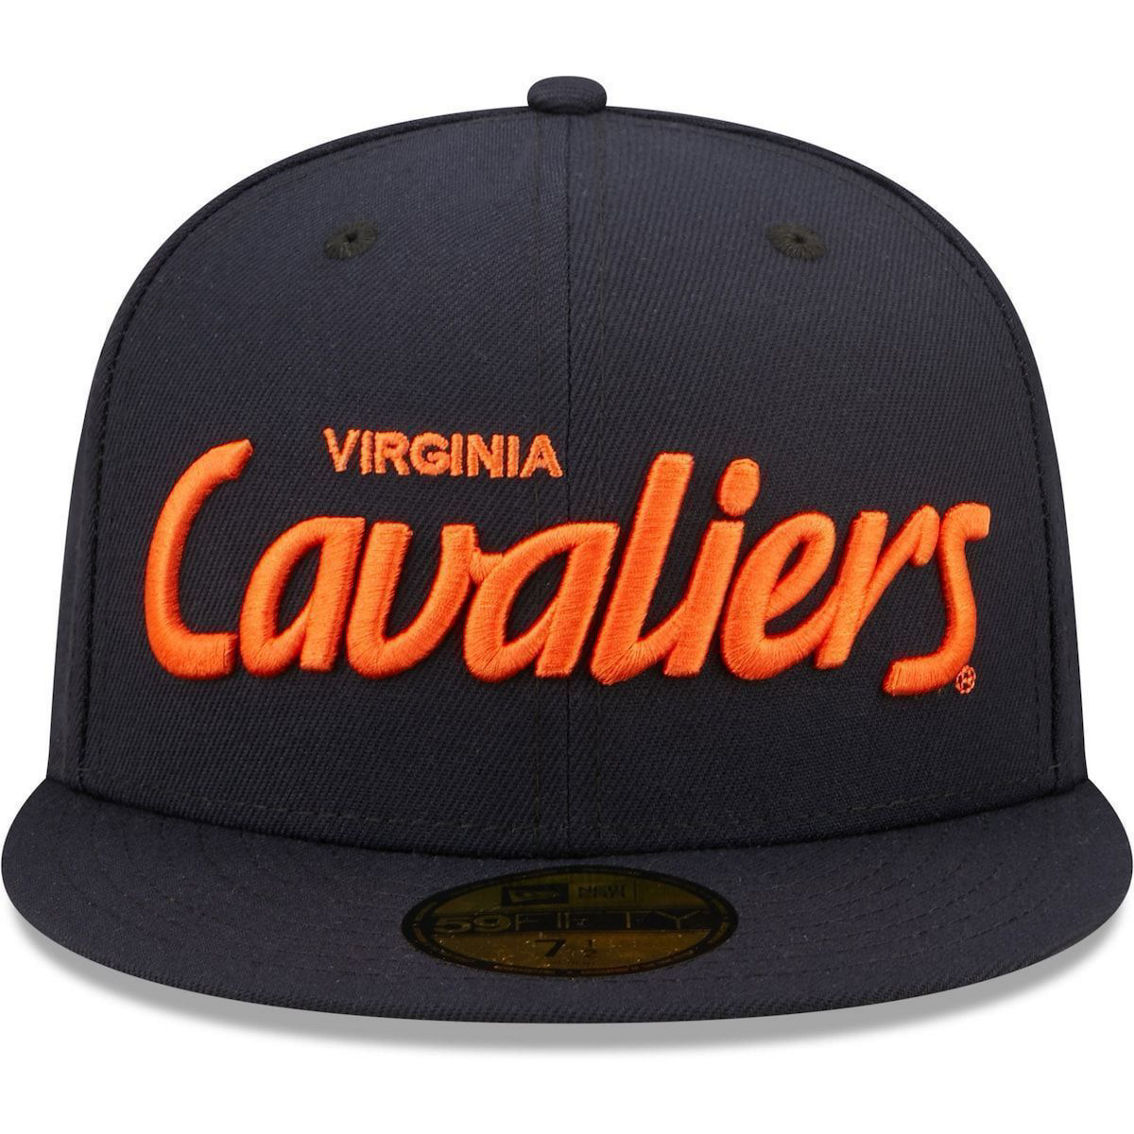 New Era Men's Navy Virginia Cavaliers Script Original 59FIFTY Fitted Hat - Image 3 of 4